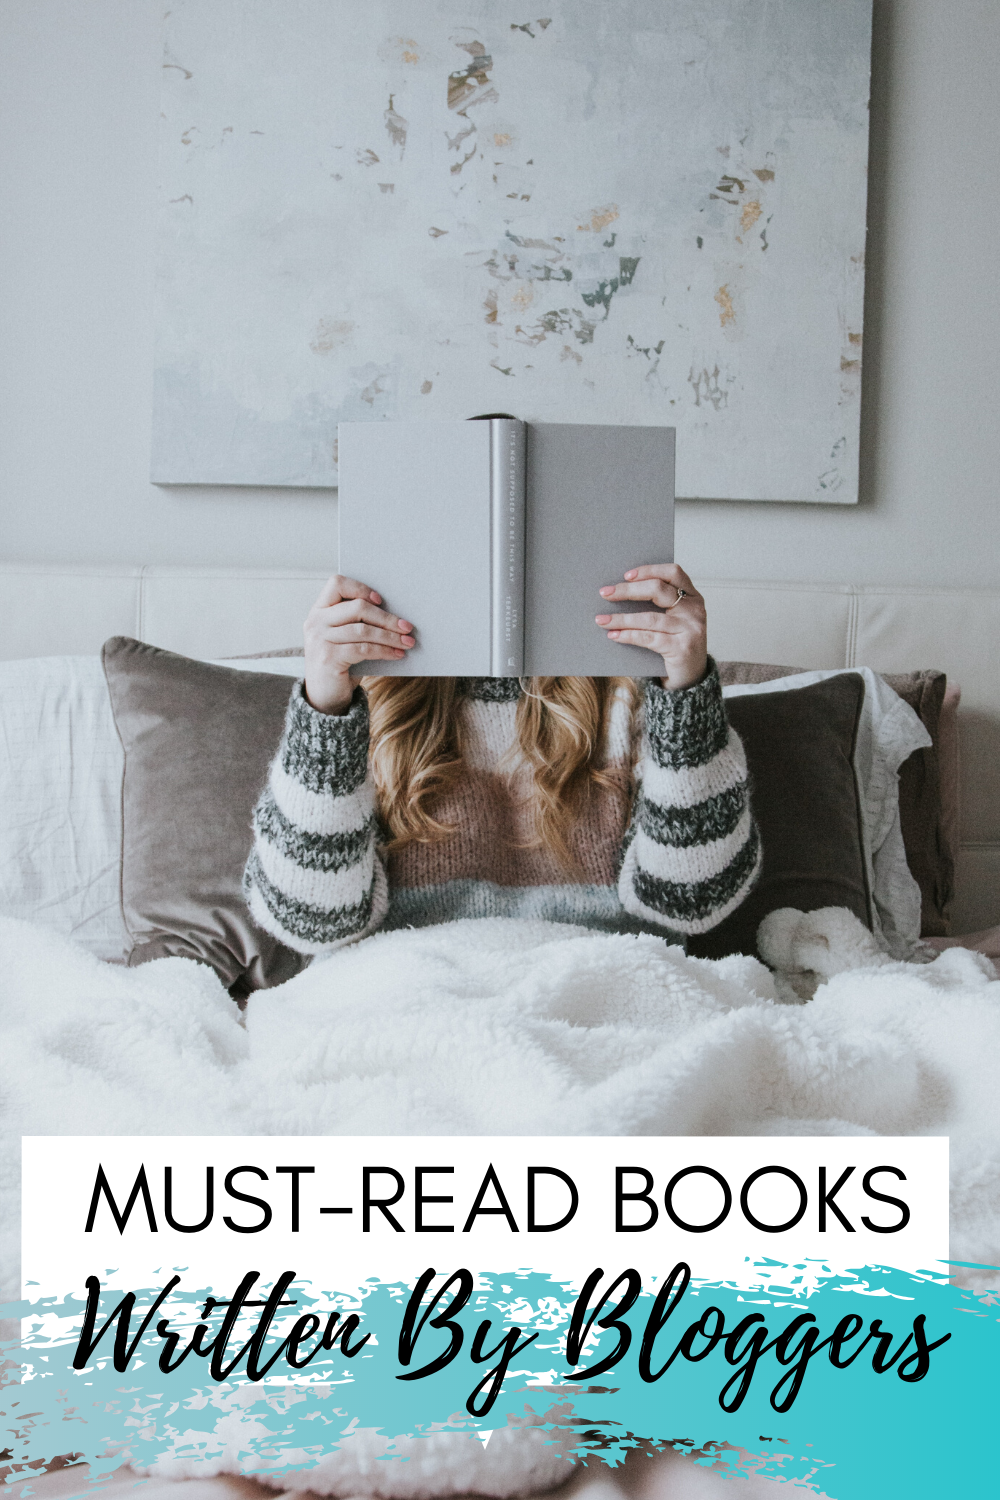 Must-read books written by bloggers